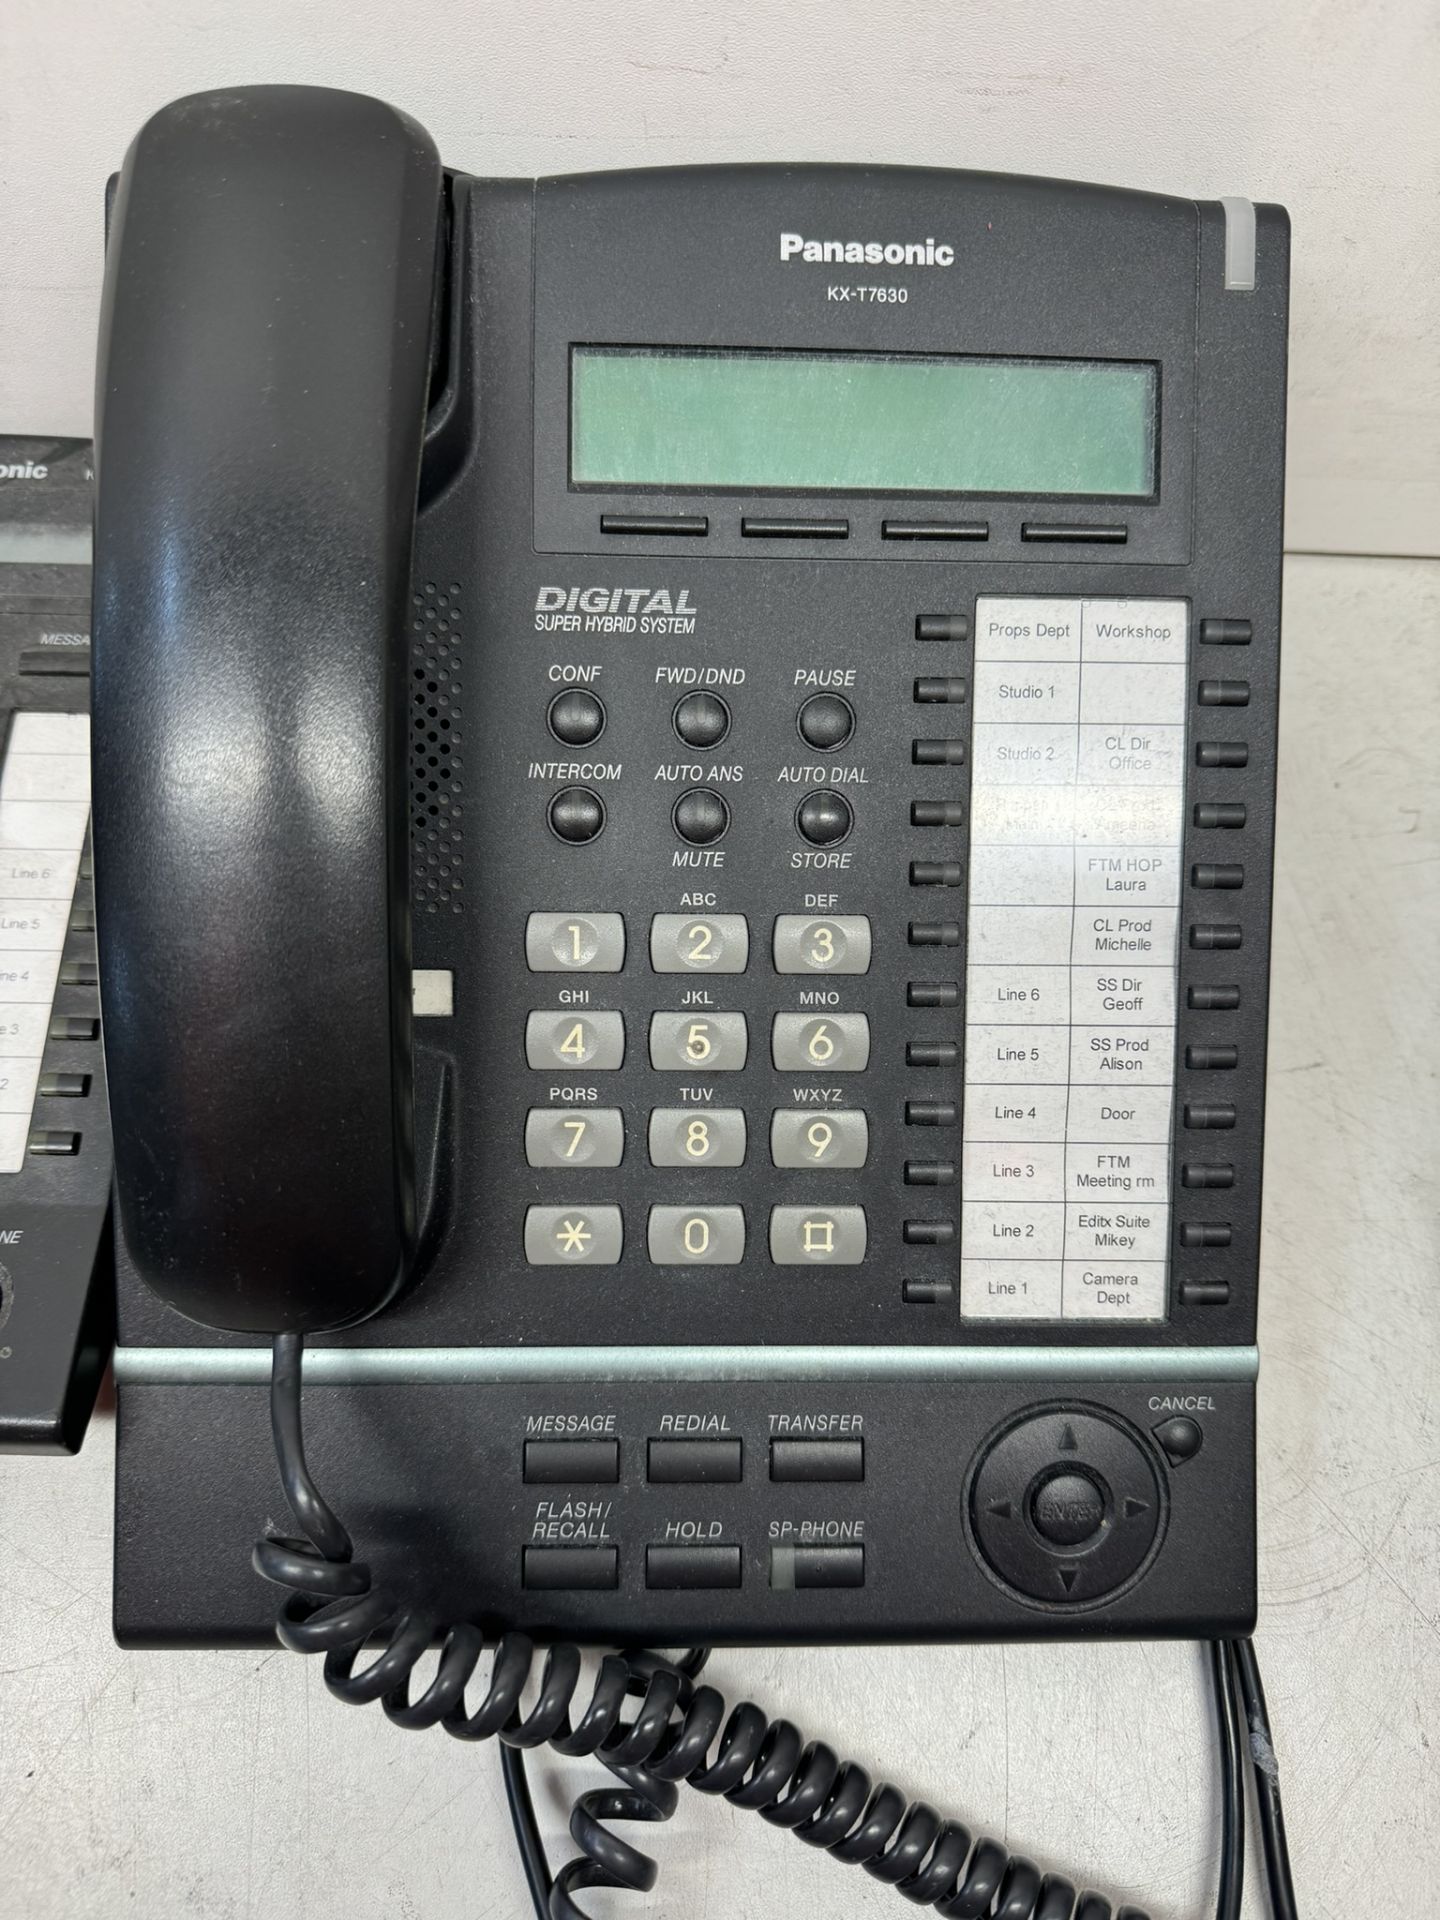 10 x Panasonic Telephones As Seen In Photos - Image 2 of 5